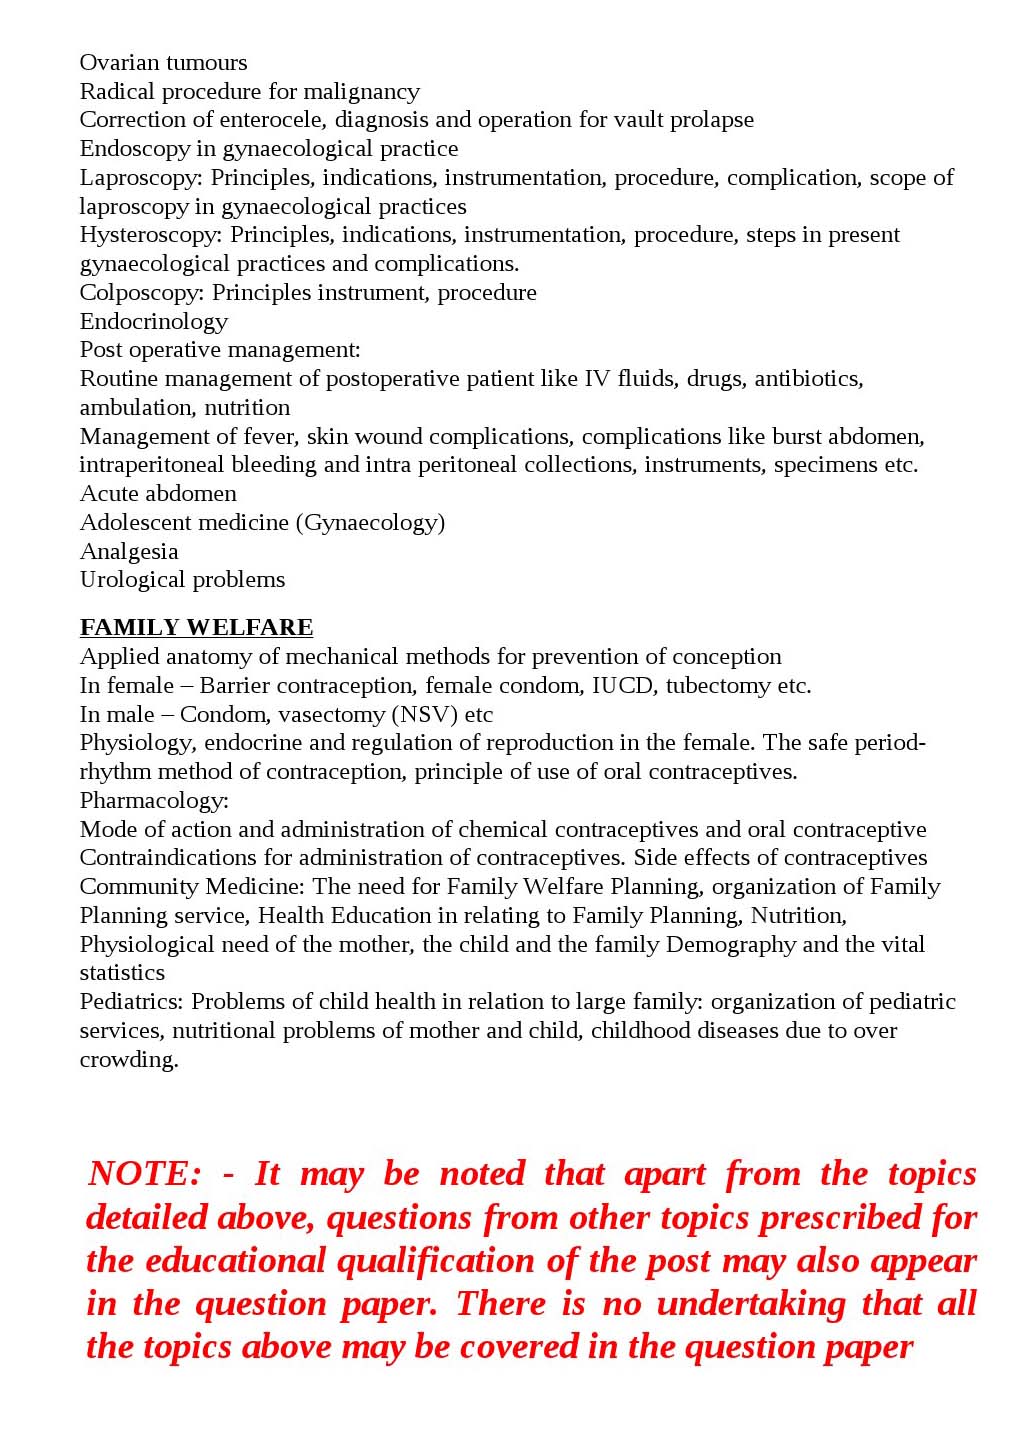 Kerala PSC Assistant Surgeon Exam Syllabus May 2020 - Notification Image 20